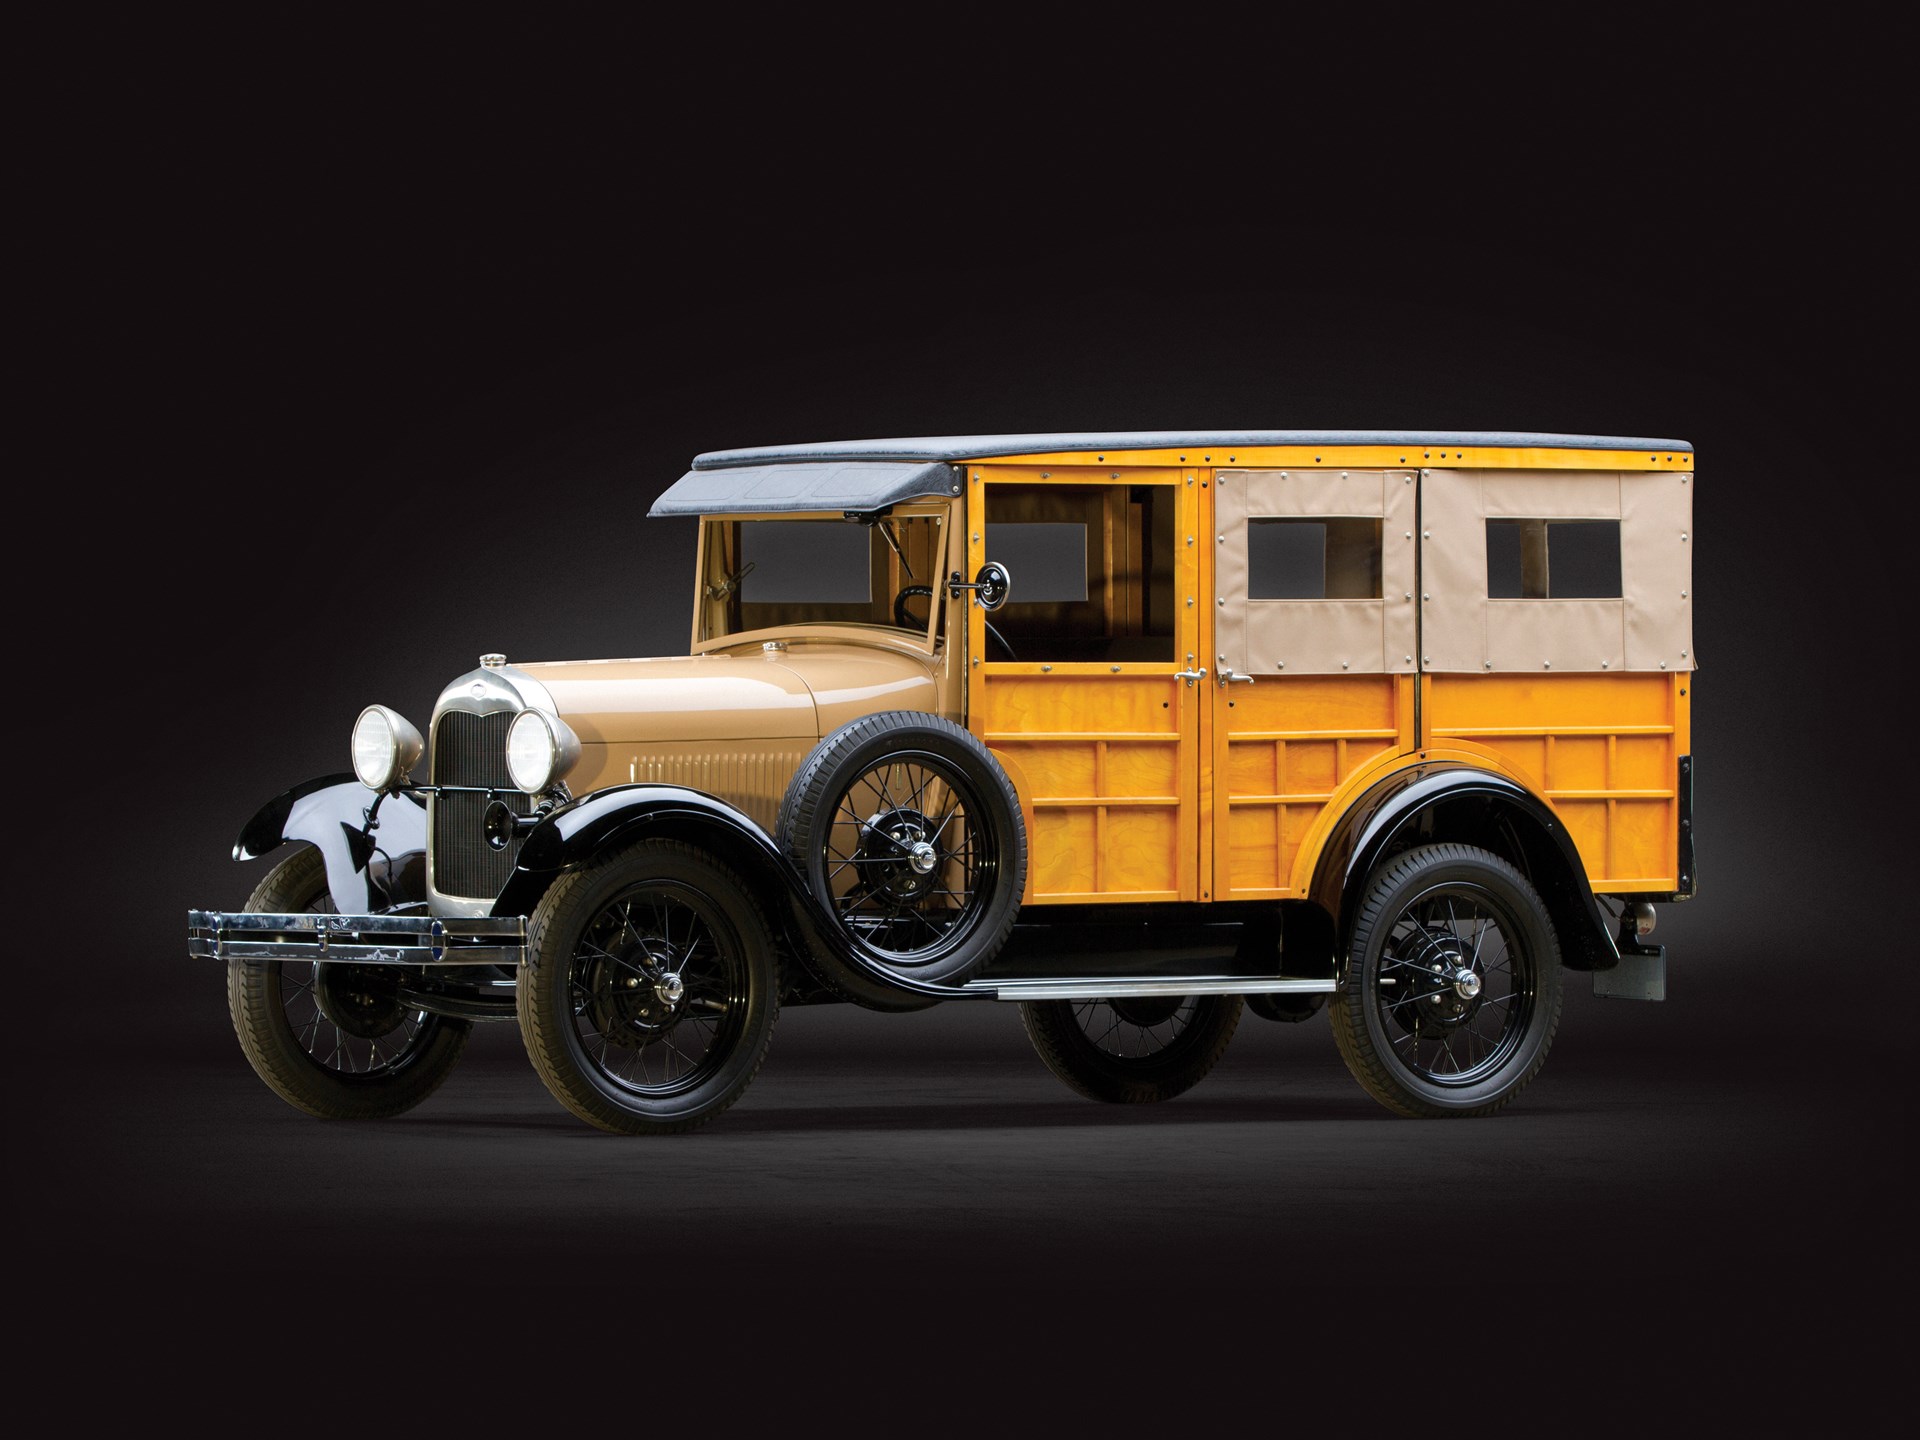 Ford wagon models